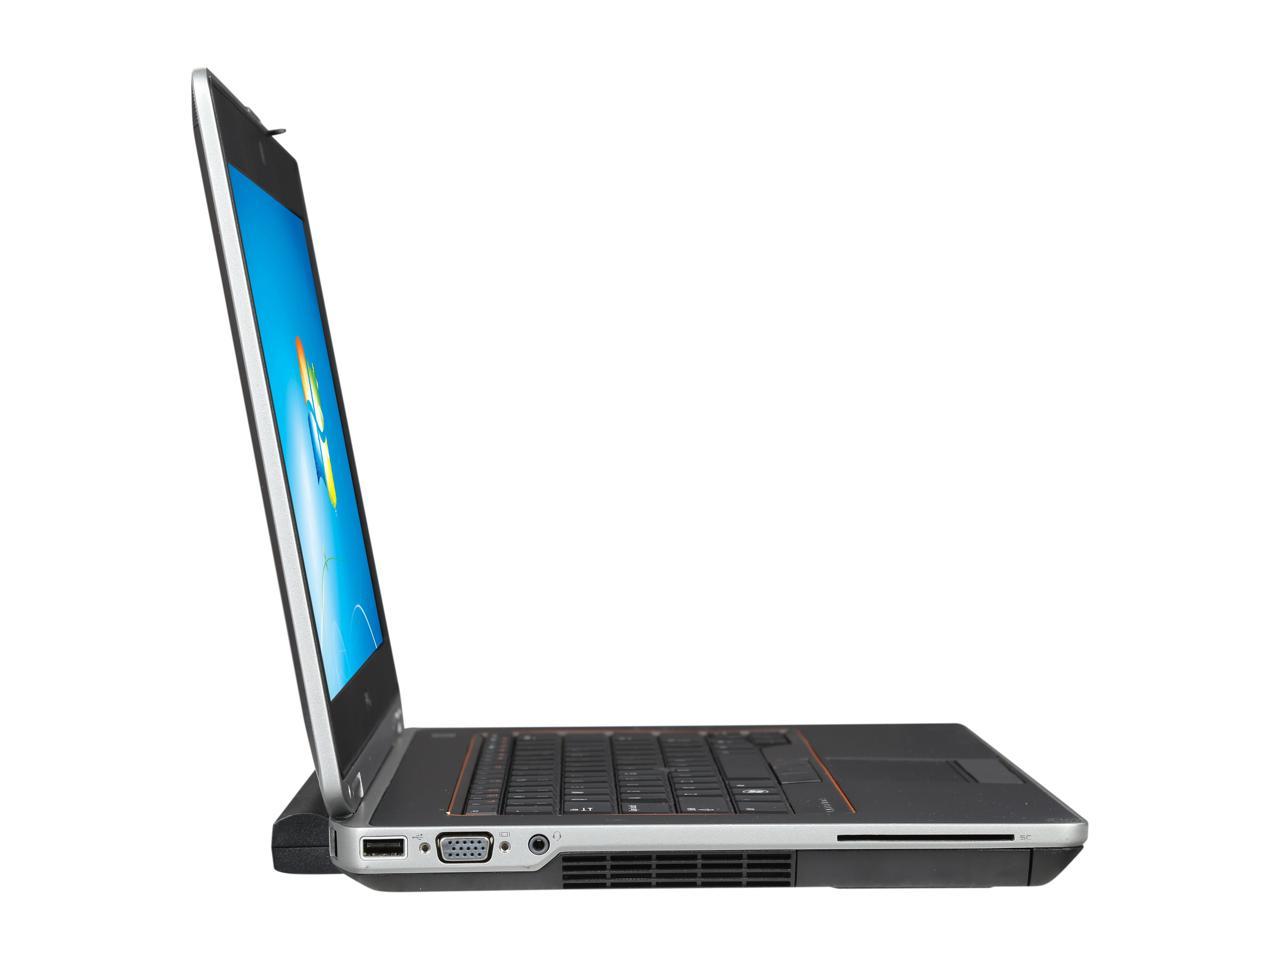 Dell Latitude E6420 14â€? Notebook with Intel Core i5-2520M 2.50Ghz, 8GB RAM, 250GB HDD, DVDROM, Windows 7 Professional 64 Bit